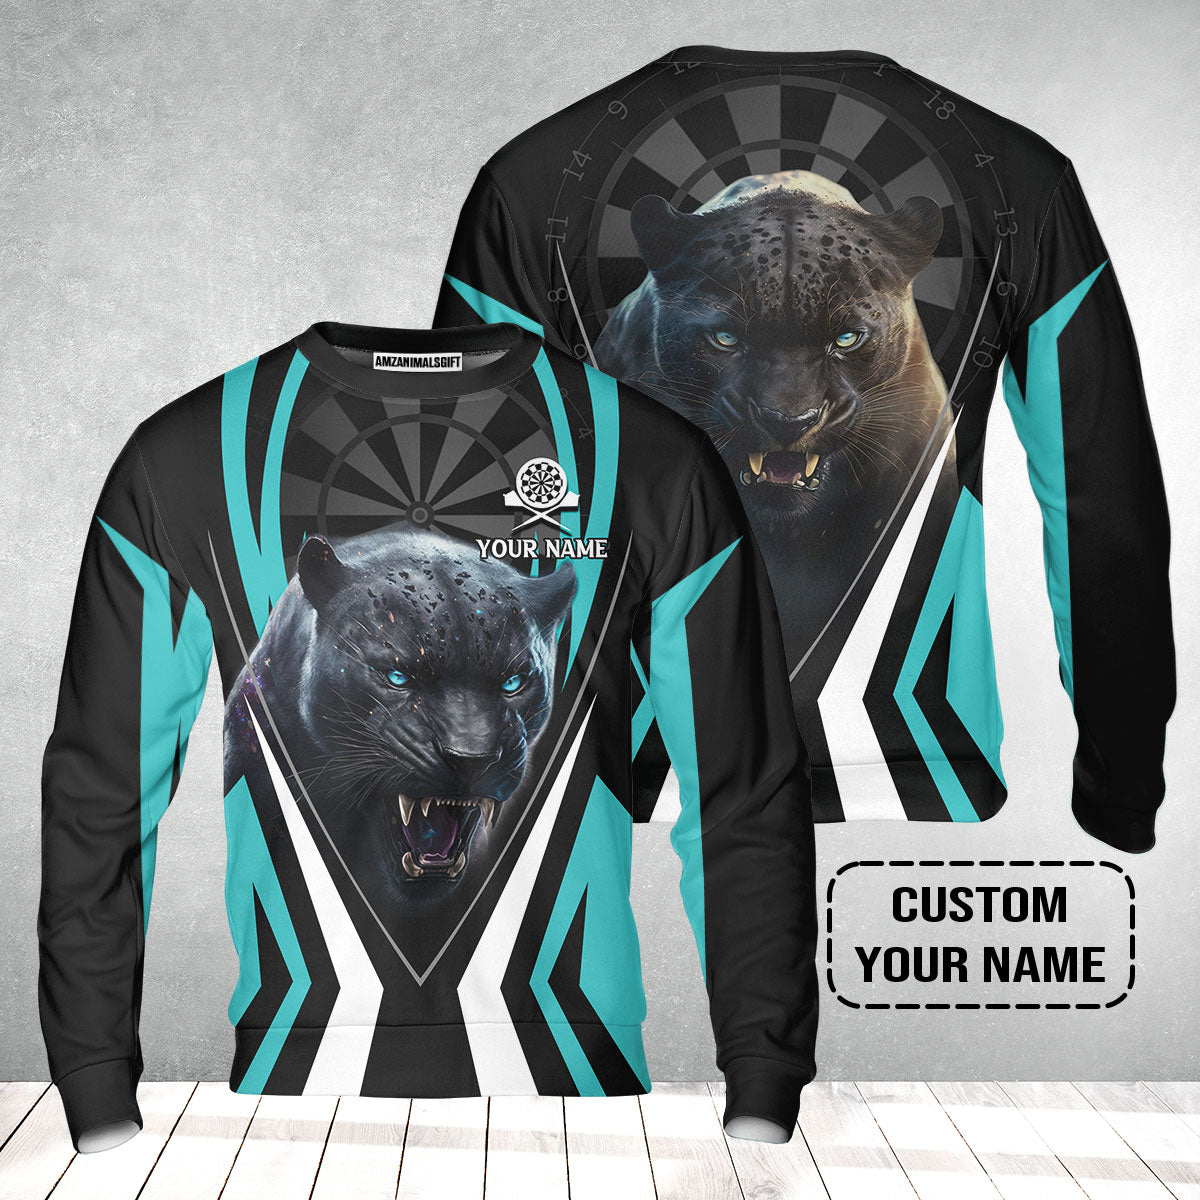 Black Panther And Darts Custom Name Sweatshirt, Bullseye Dartboard Personalized Sweatshirt - Gift For Darts Lovers, Friends